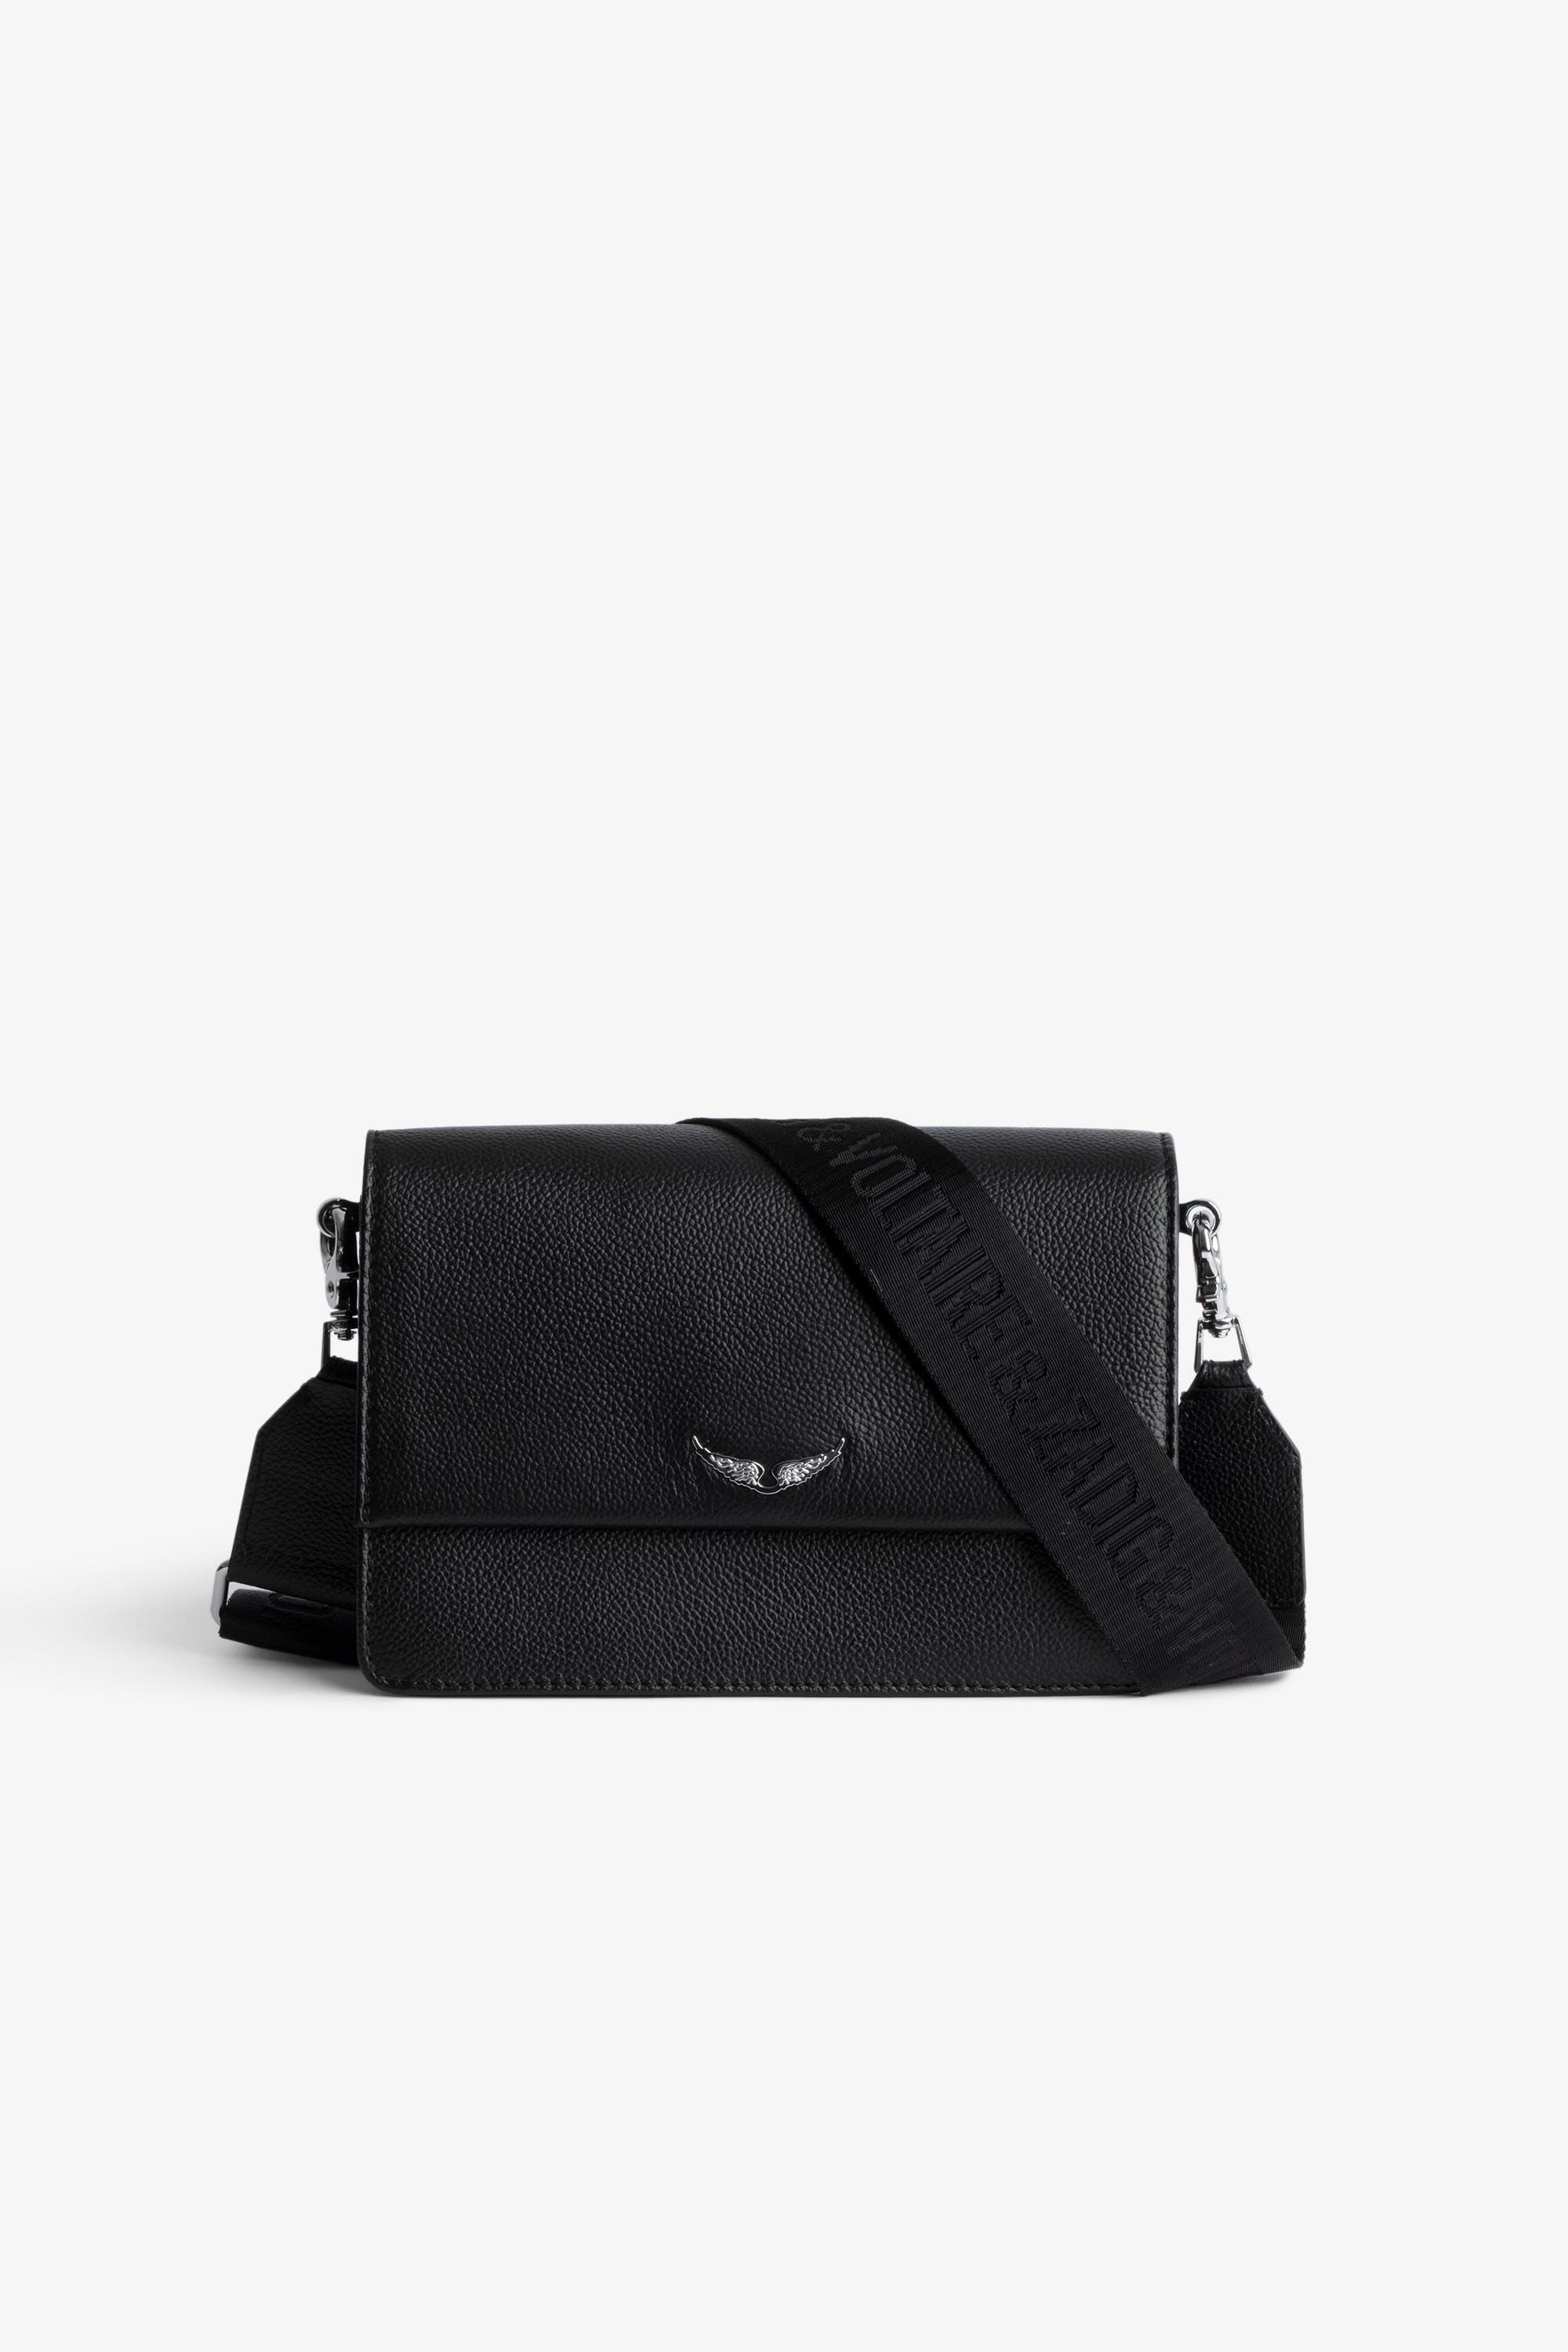 Zadig & Voltaire Lolita Wings Bag in Black | Lyst